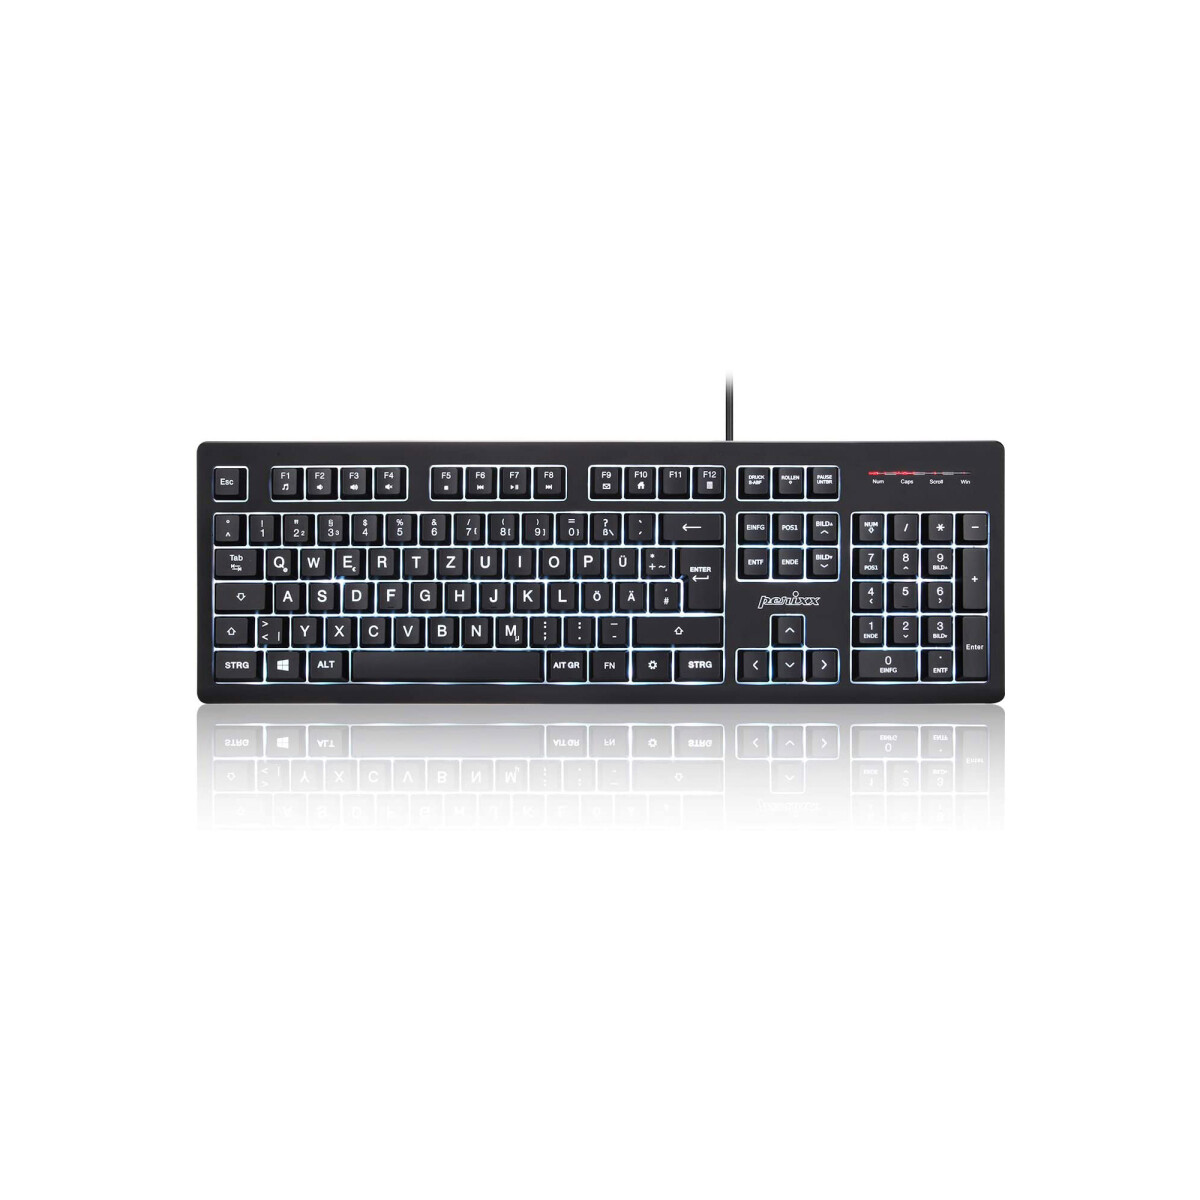 Perixx PERIBOARD-329 DE, wired, USB keyboard with backlight,